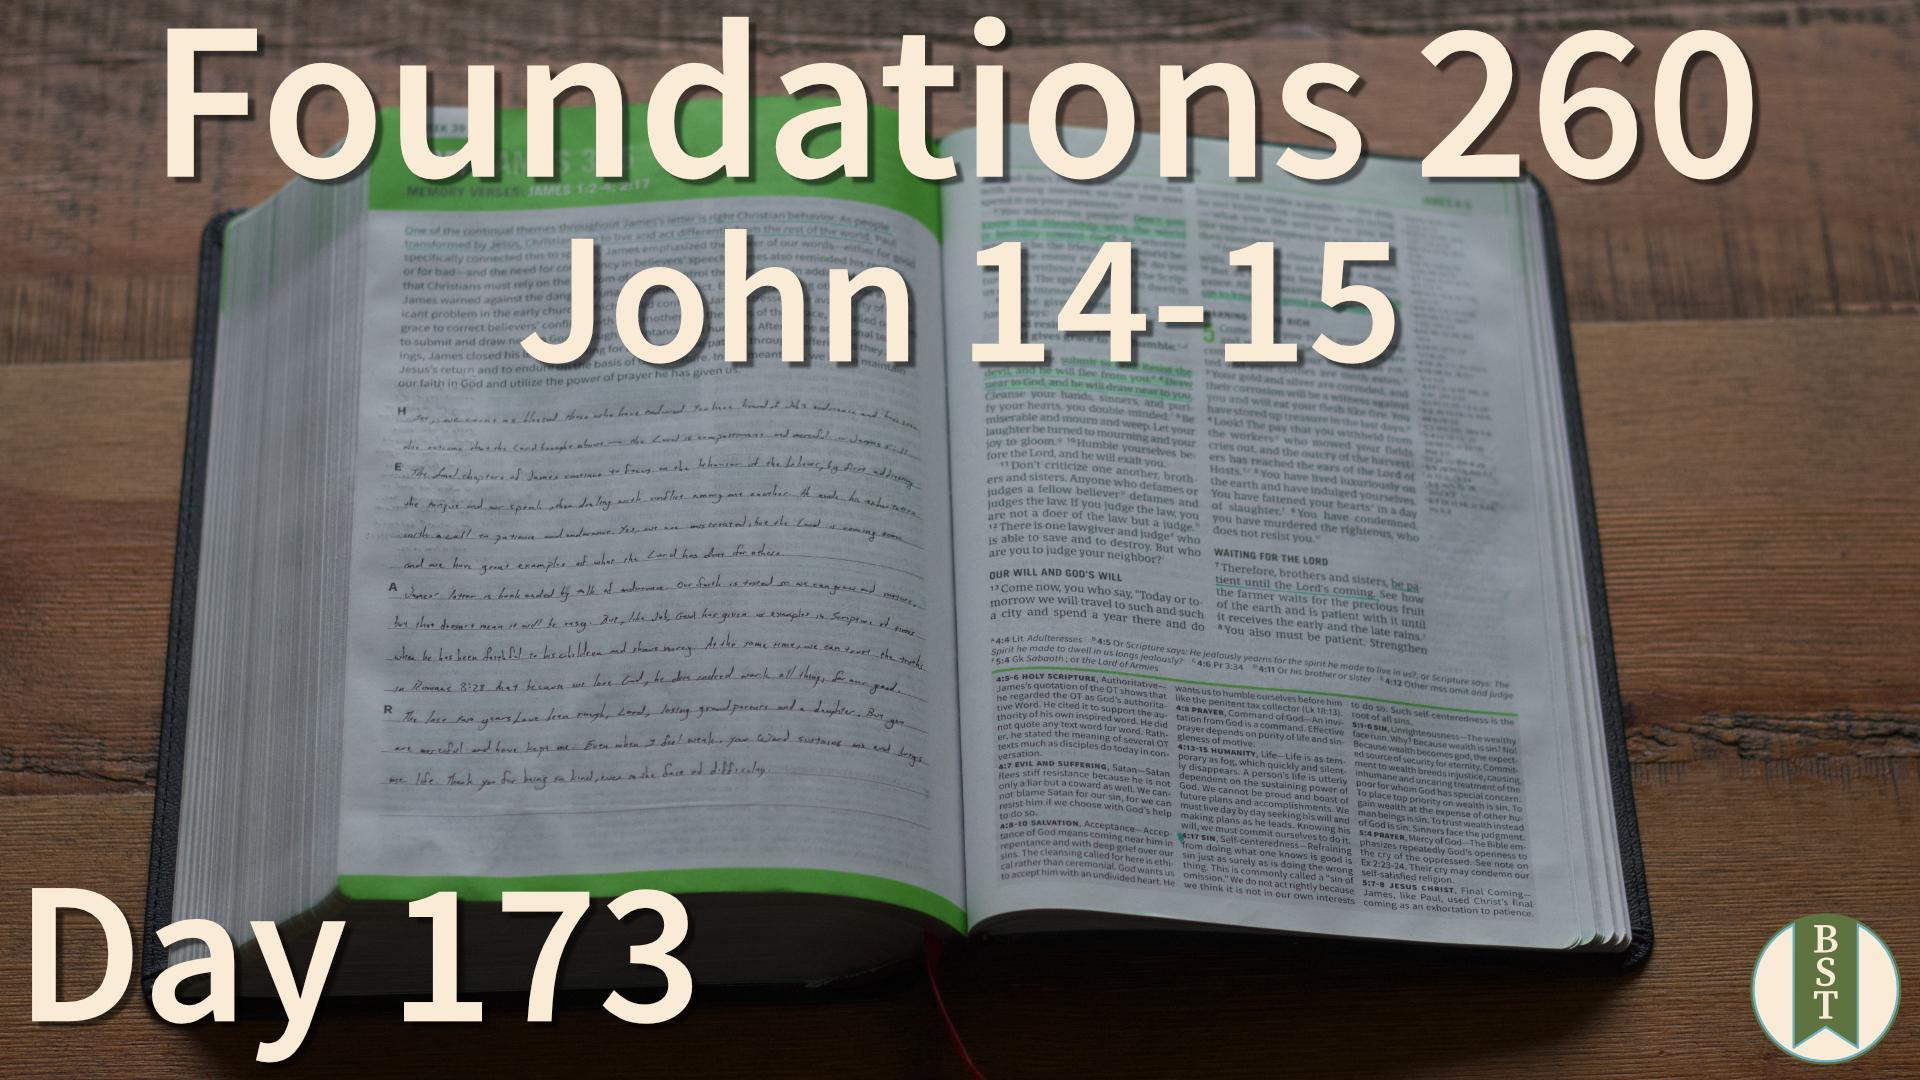 F260 Day 173: John 14-15